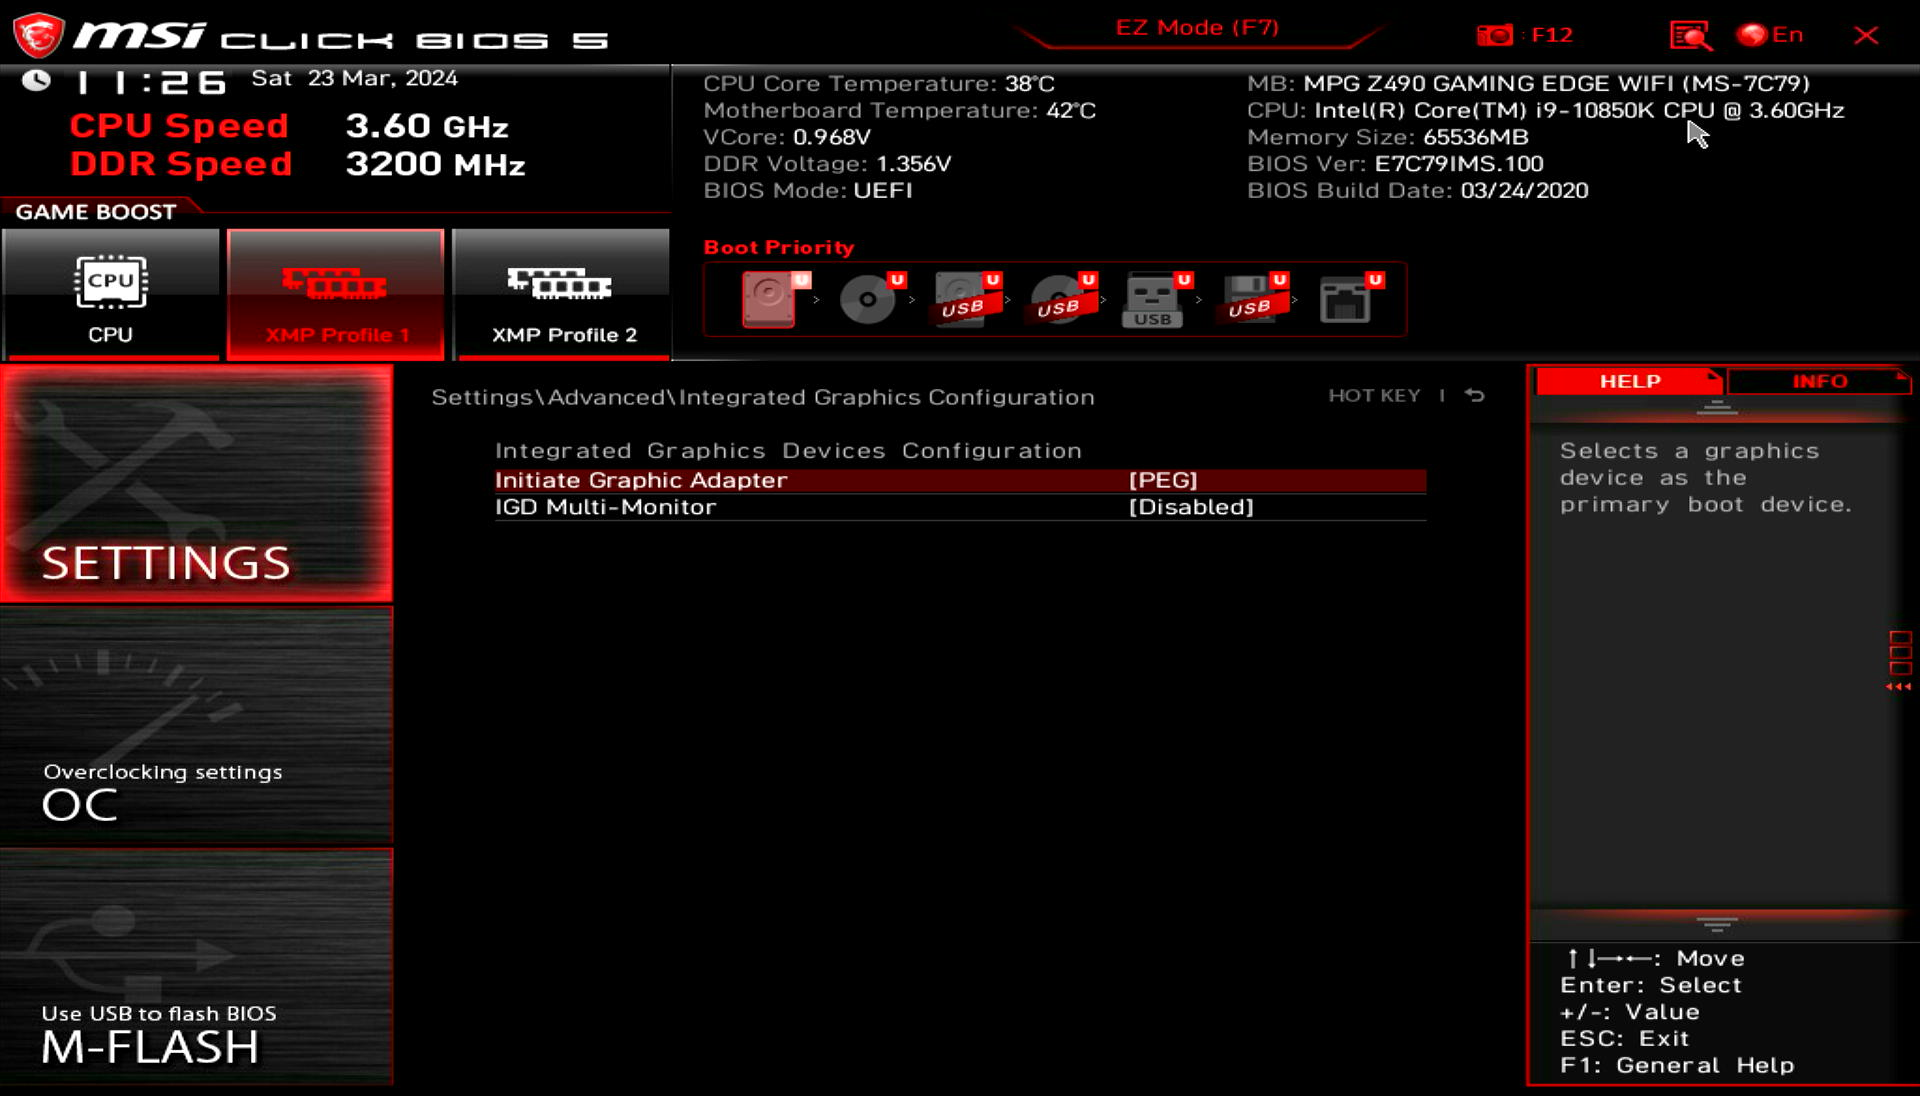 Example of GPU initialization settings on MSI Z490 motherboard